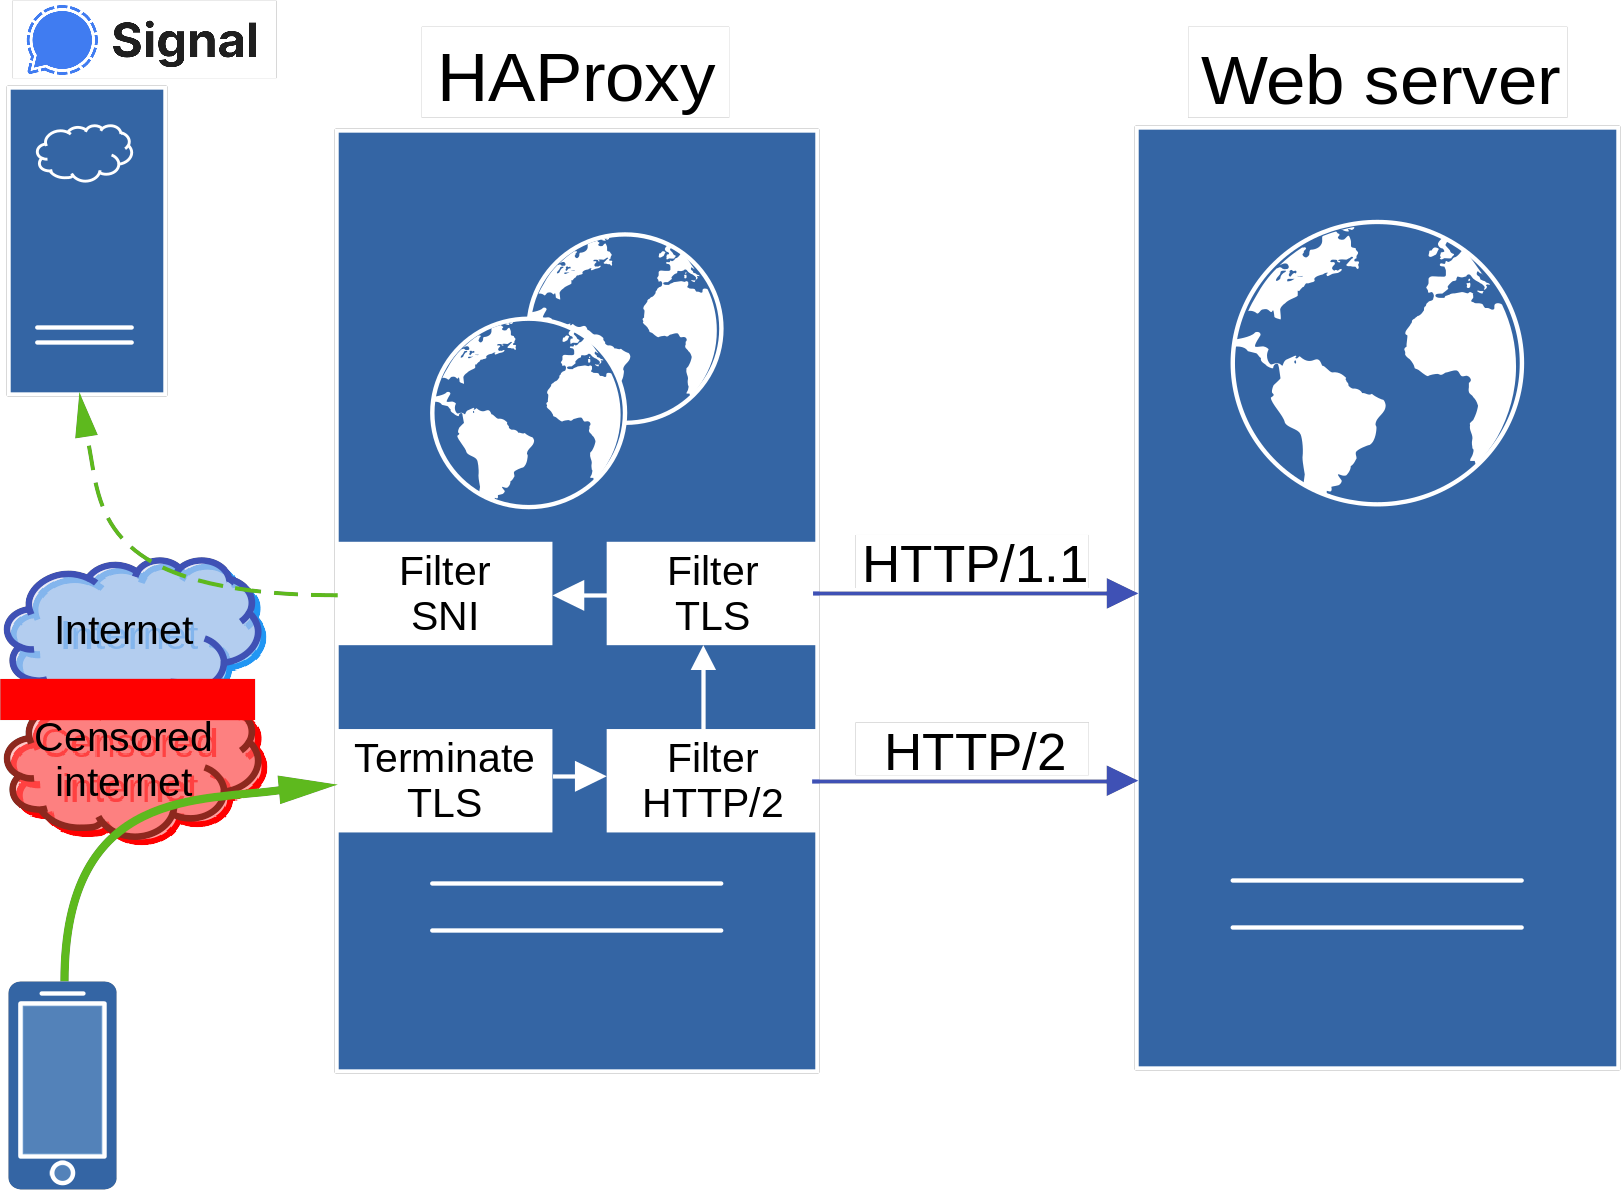 HAProxy and web server